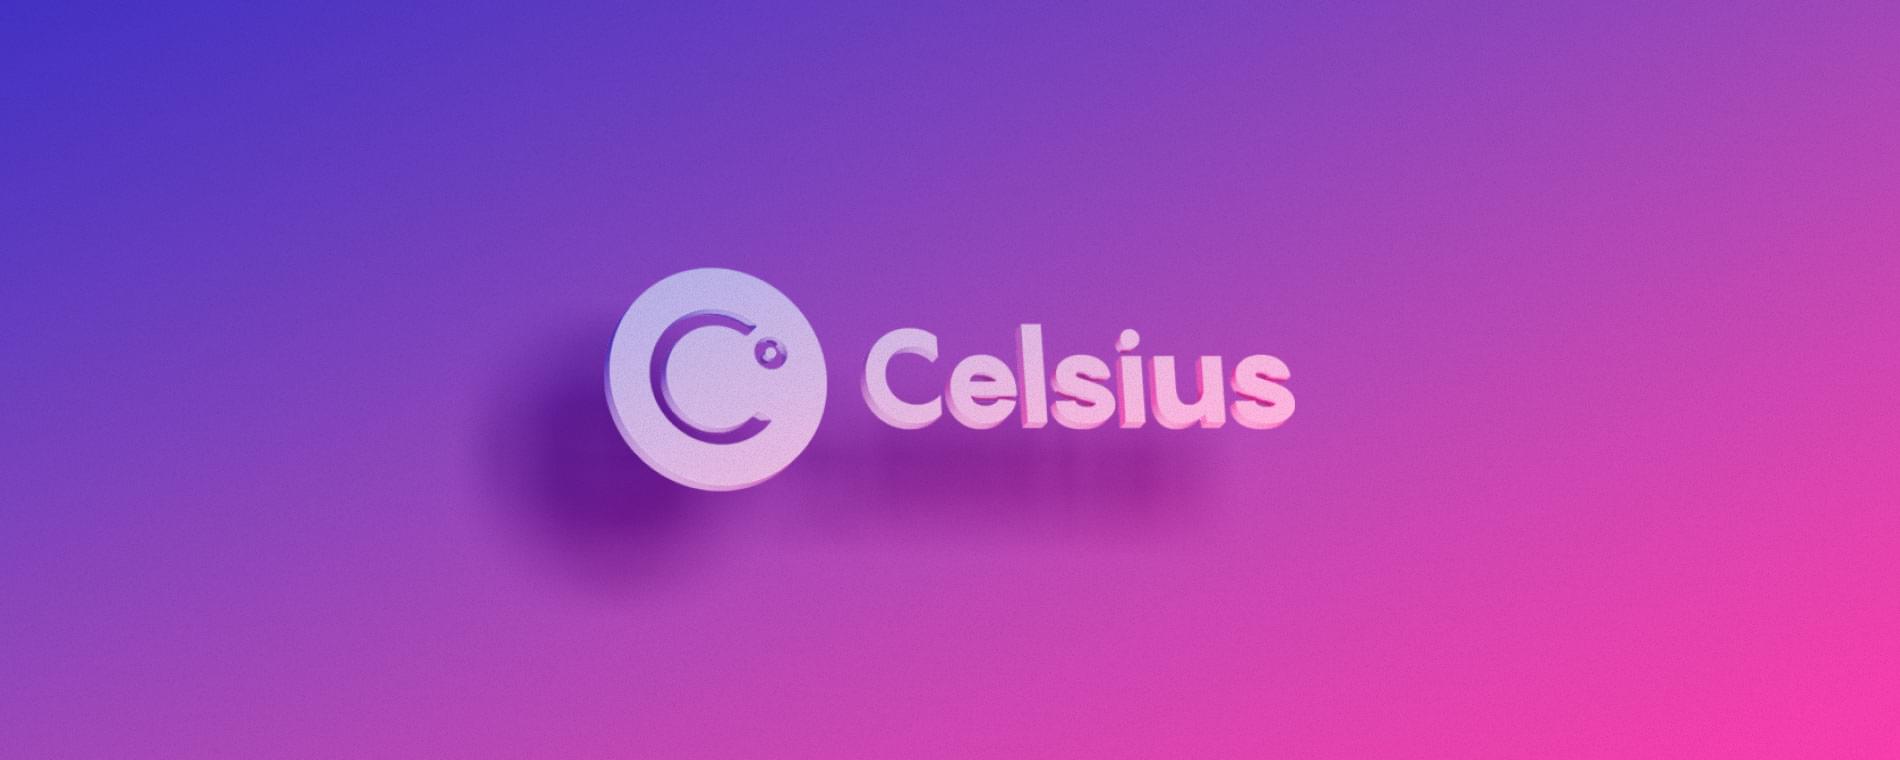 Celsius announces plans to take Bitcoin mining business public